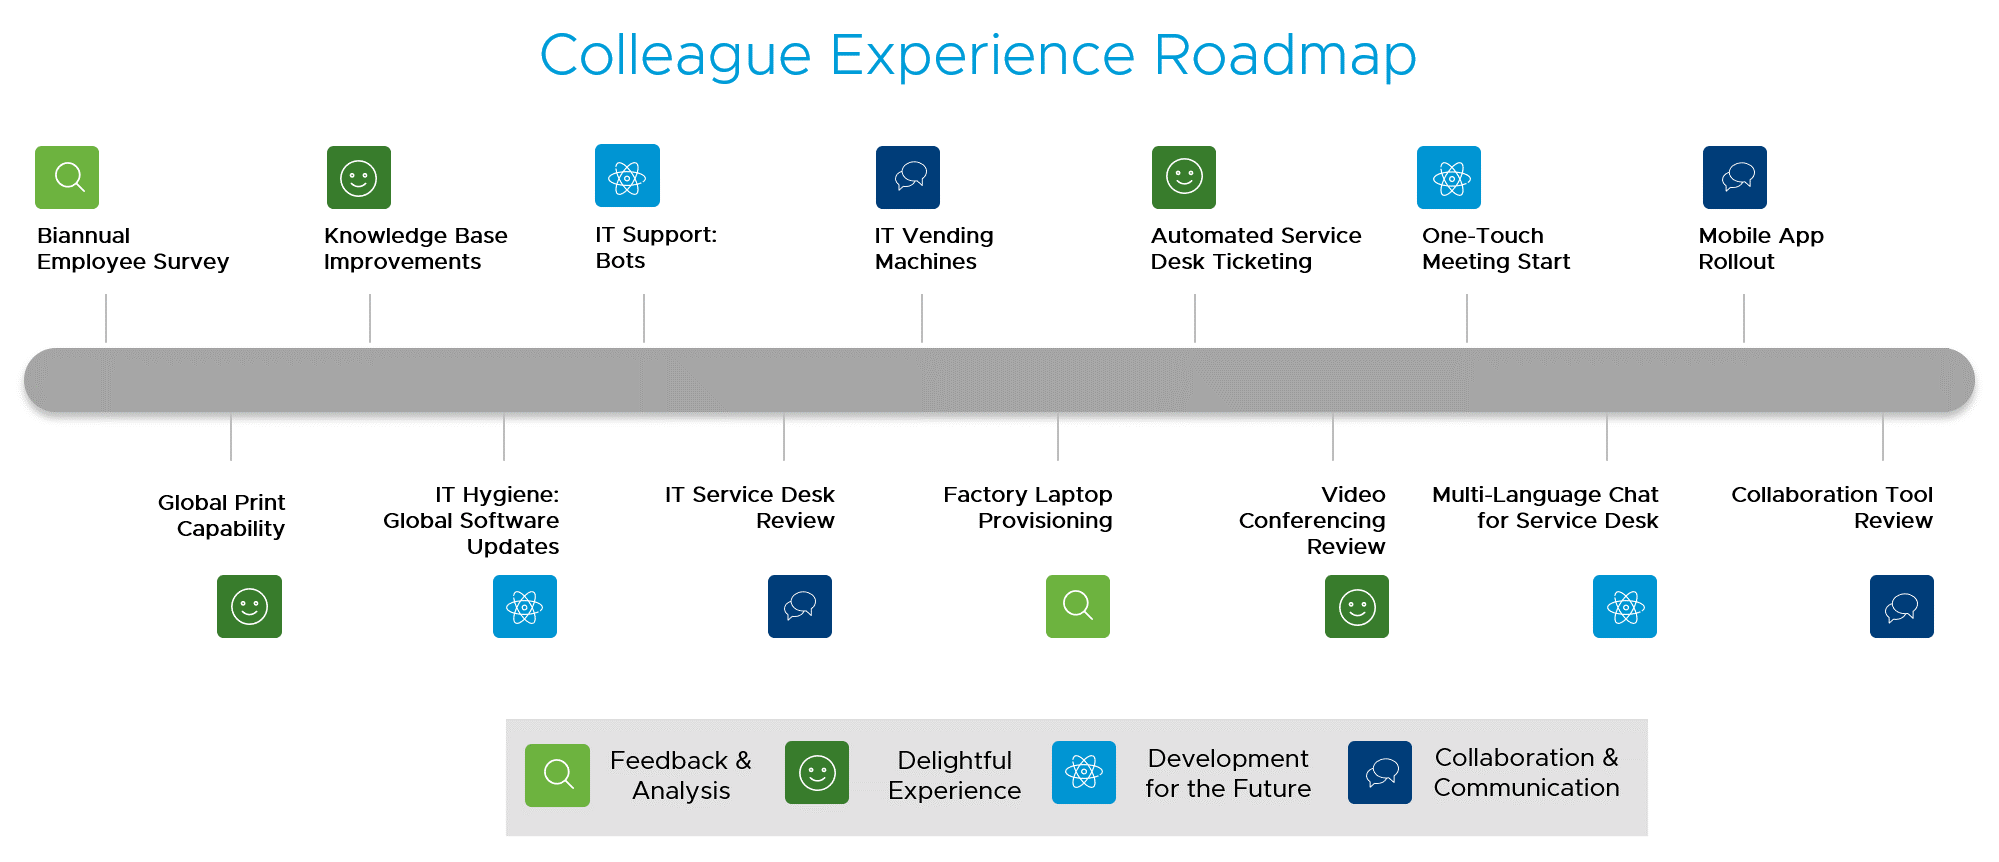 olleague experience roadmap